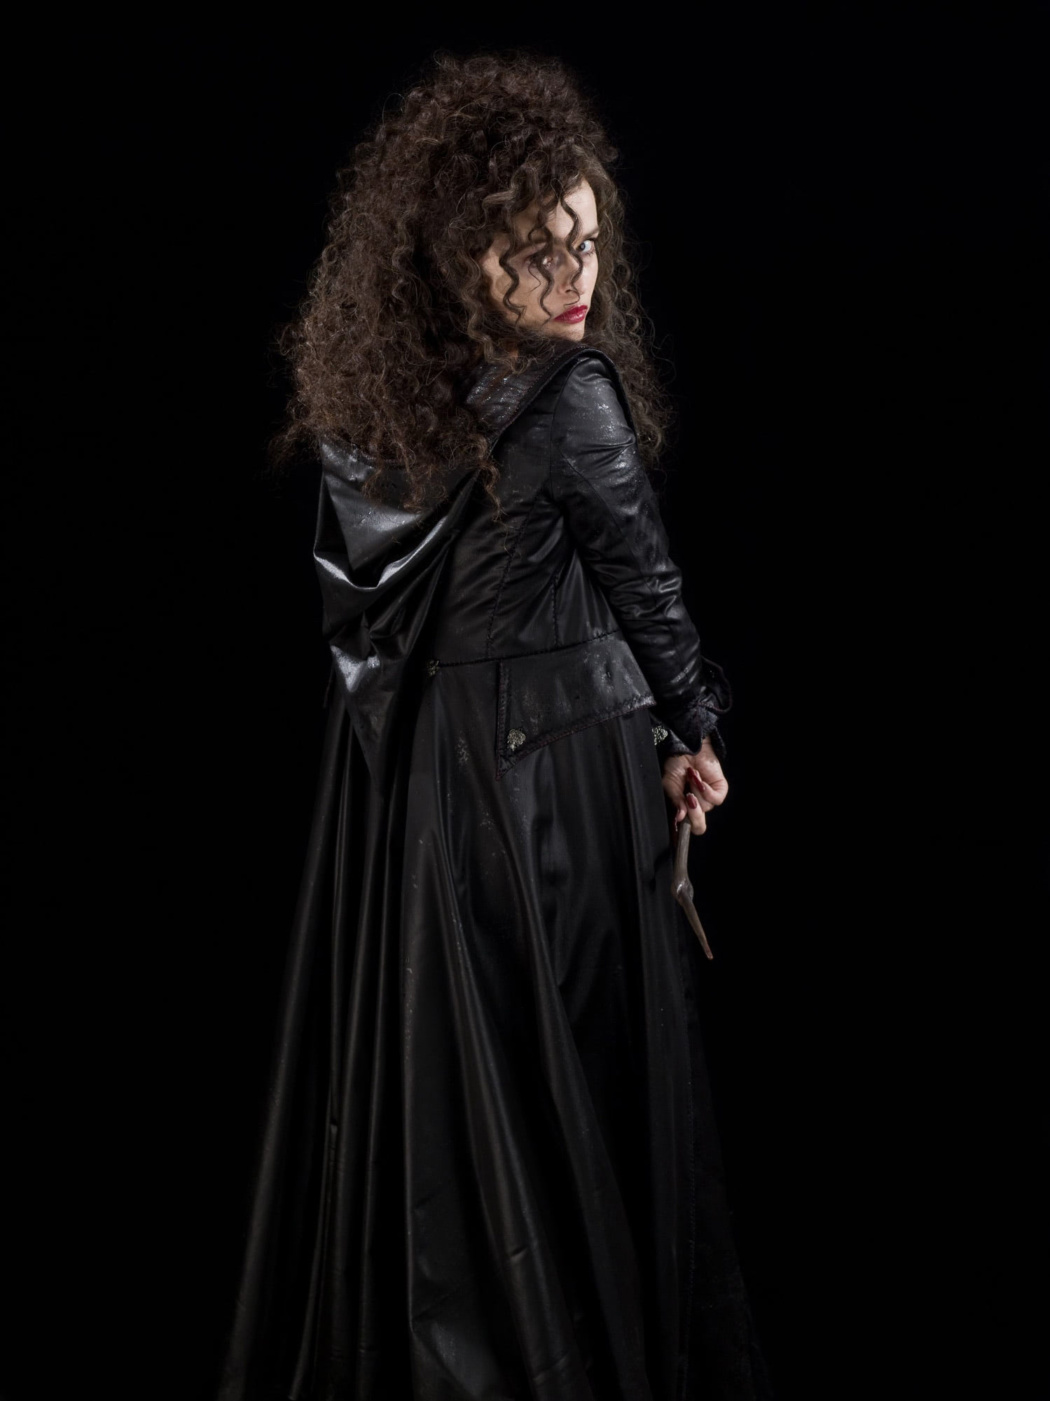 Bellatrix Lestrange' pictures.